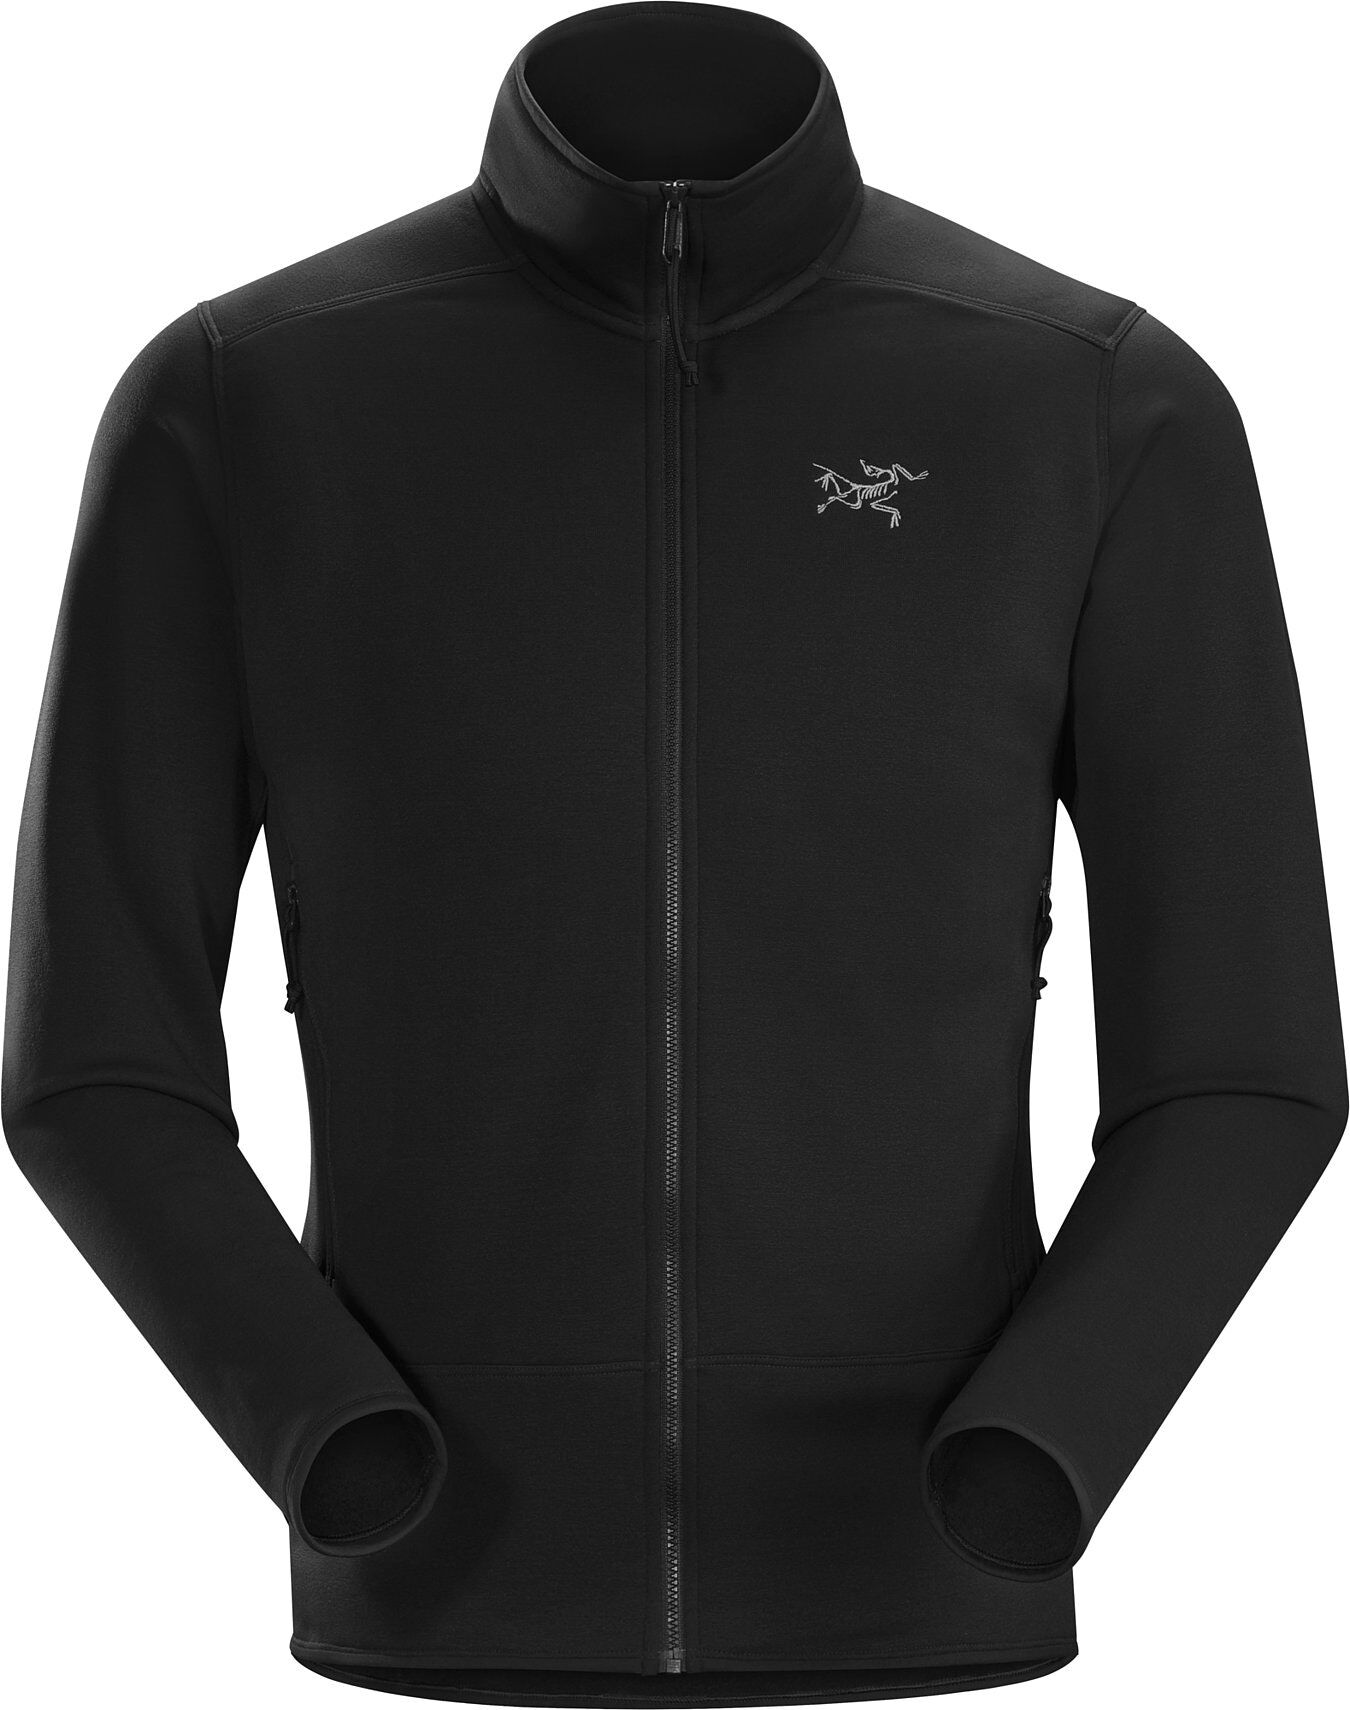 Arc'teryx Kyanite Jacket - Fleece jacket - Men's